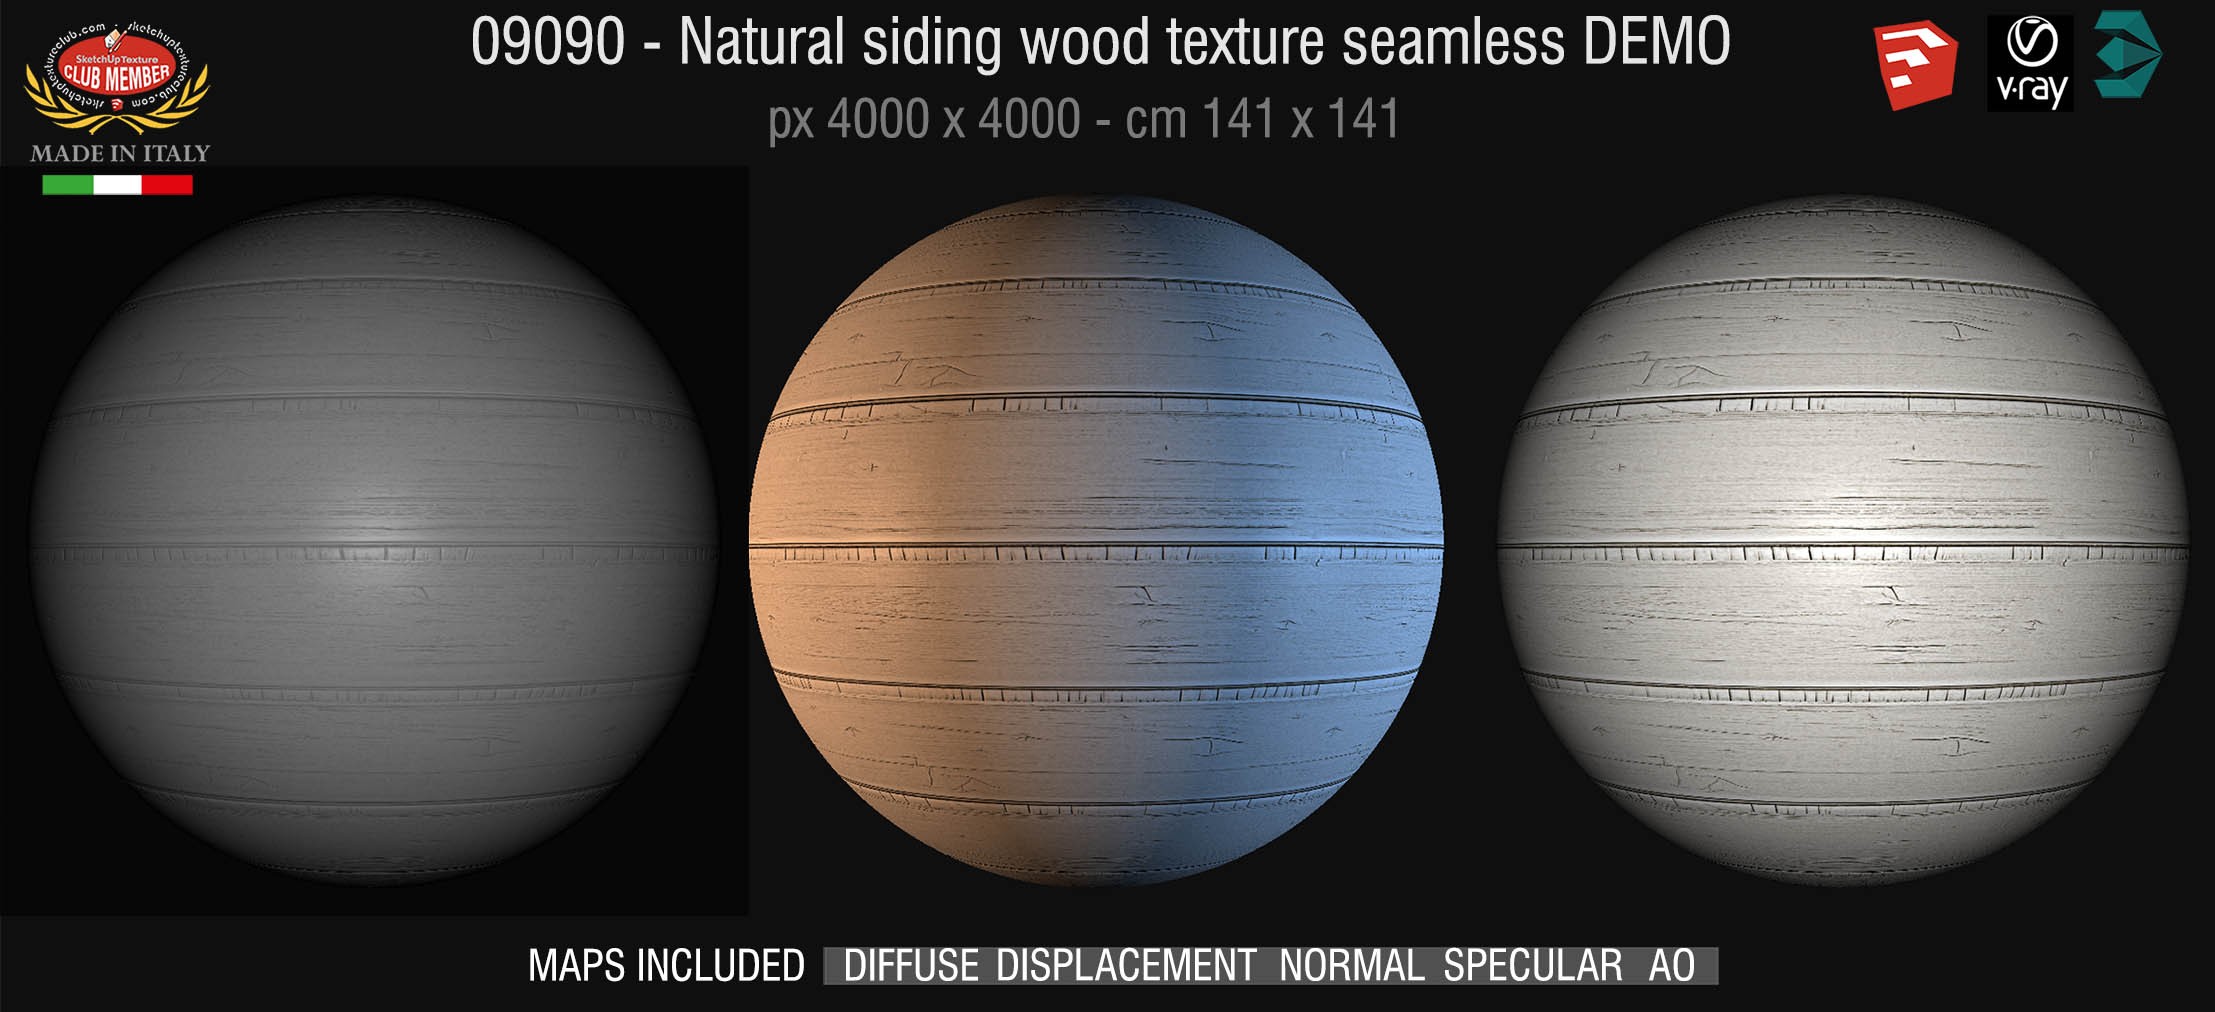 09090 HR Siding wood texture seamless + maps DEMO